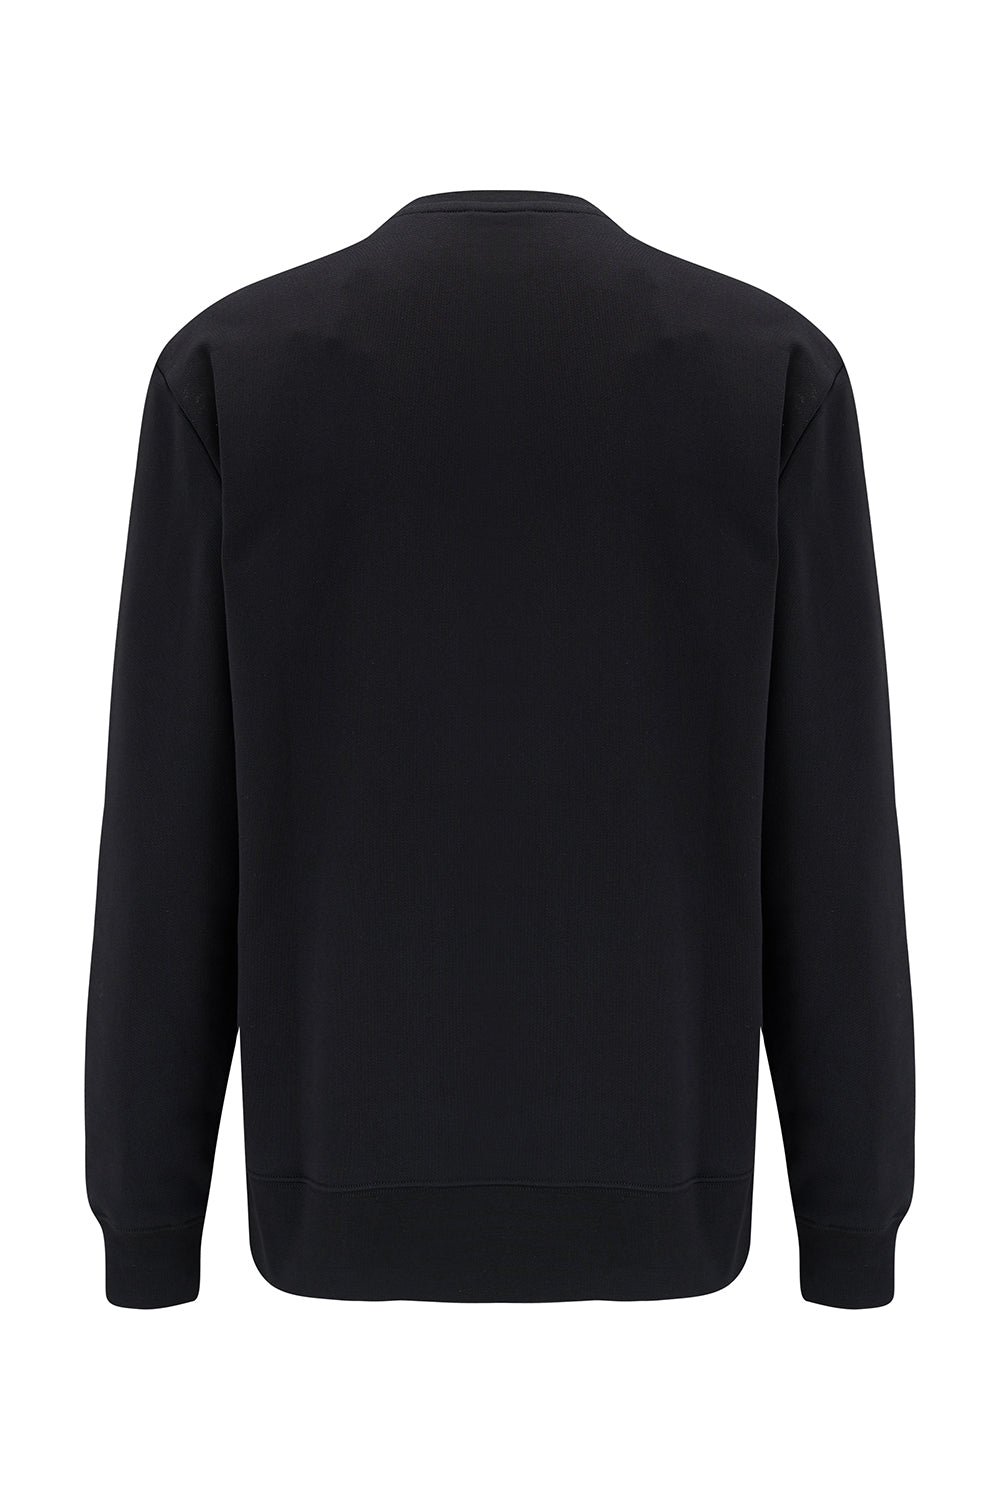 Missoni Men’s Cotton Sweater Black - Back View